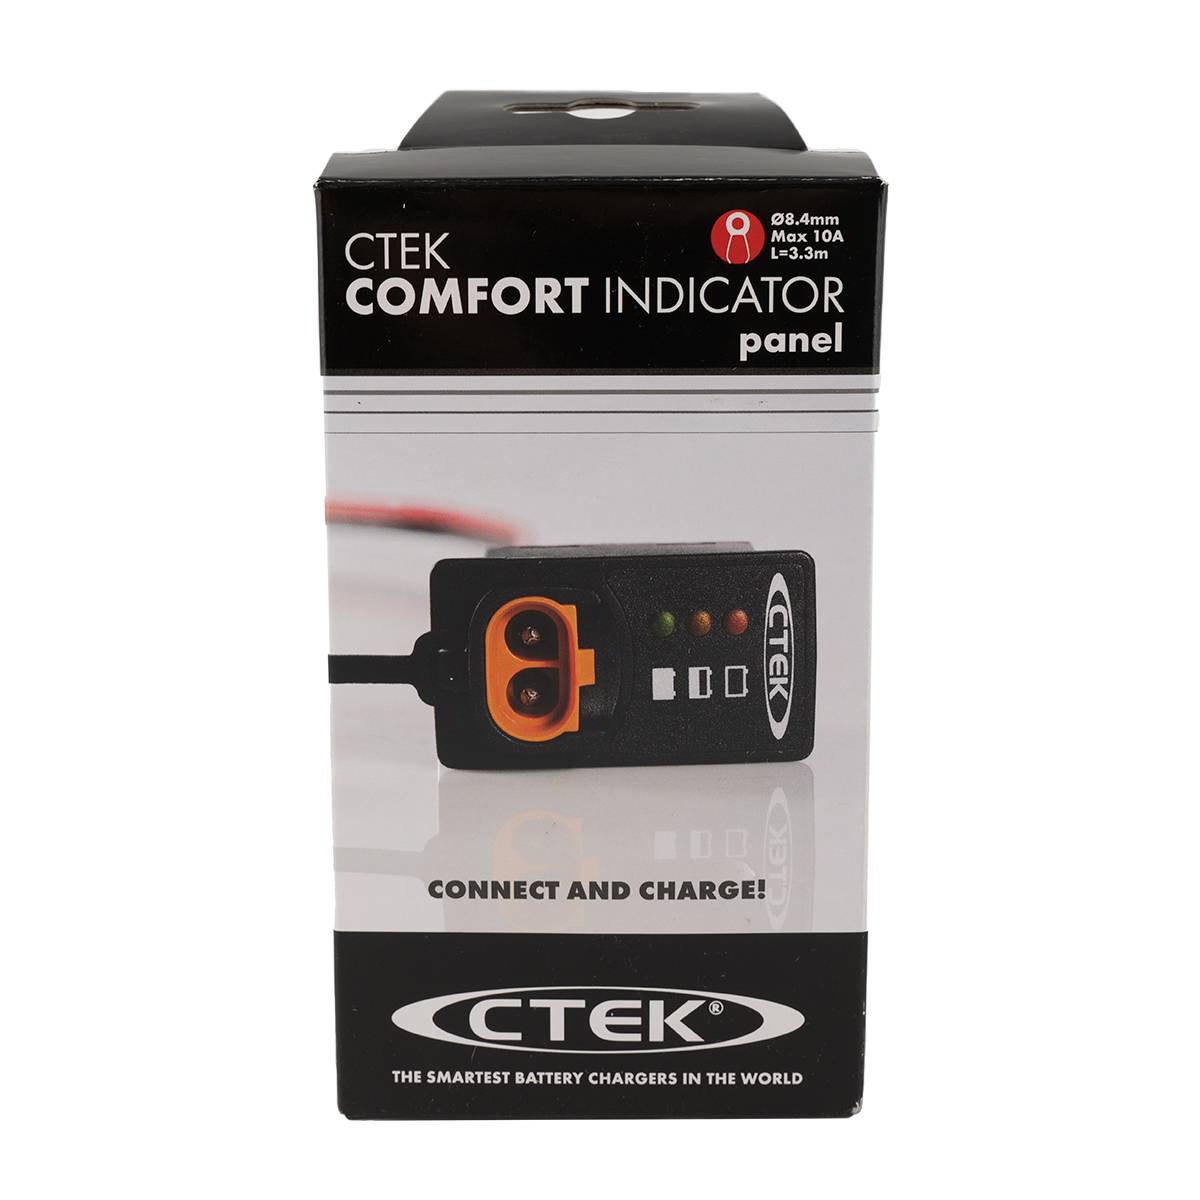 CTEK Comfort Indicator Batteriewächter Panel M8 3,3m Schnellverbinder